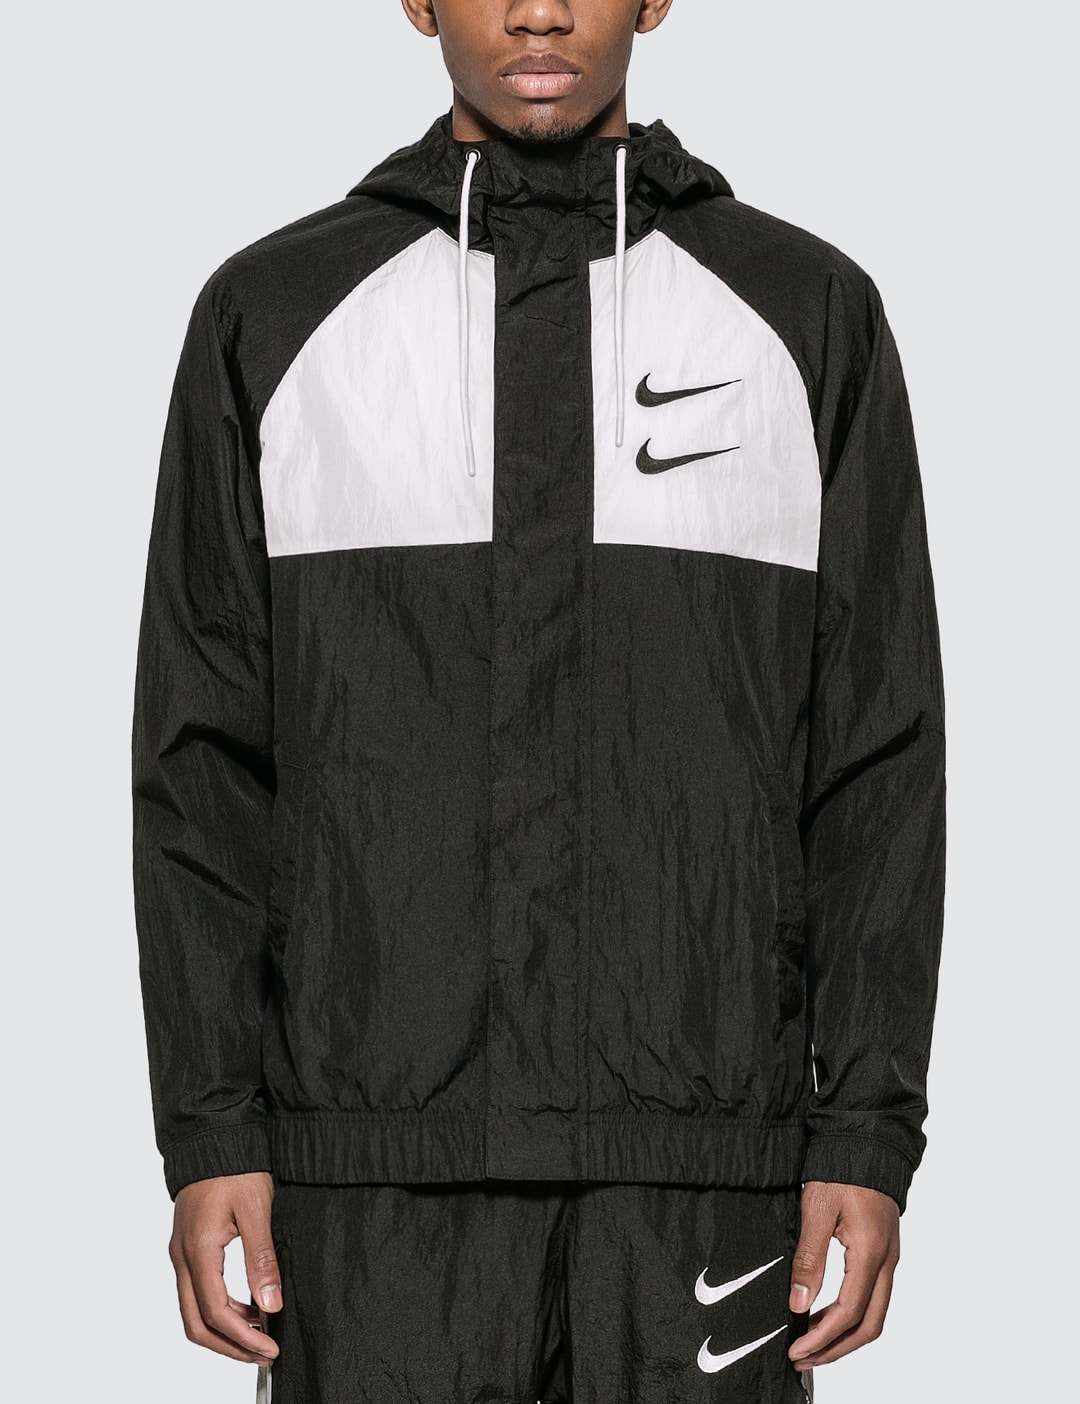 Nike - Nike Sportswear Swoosh Woven Jacket | HBX - Globally Curated Fashion by